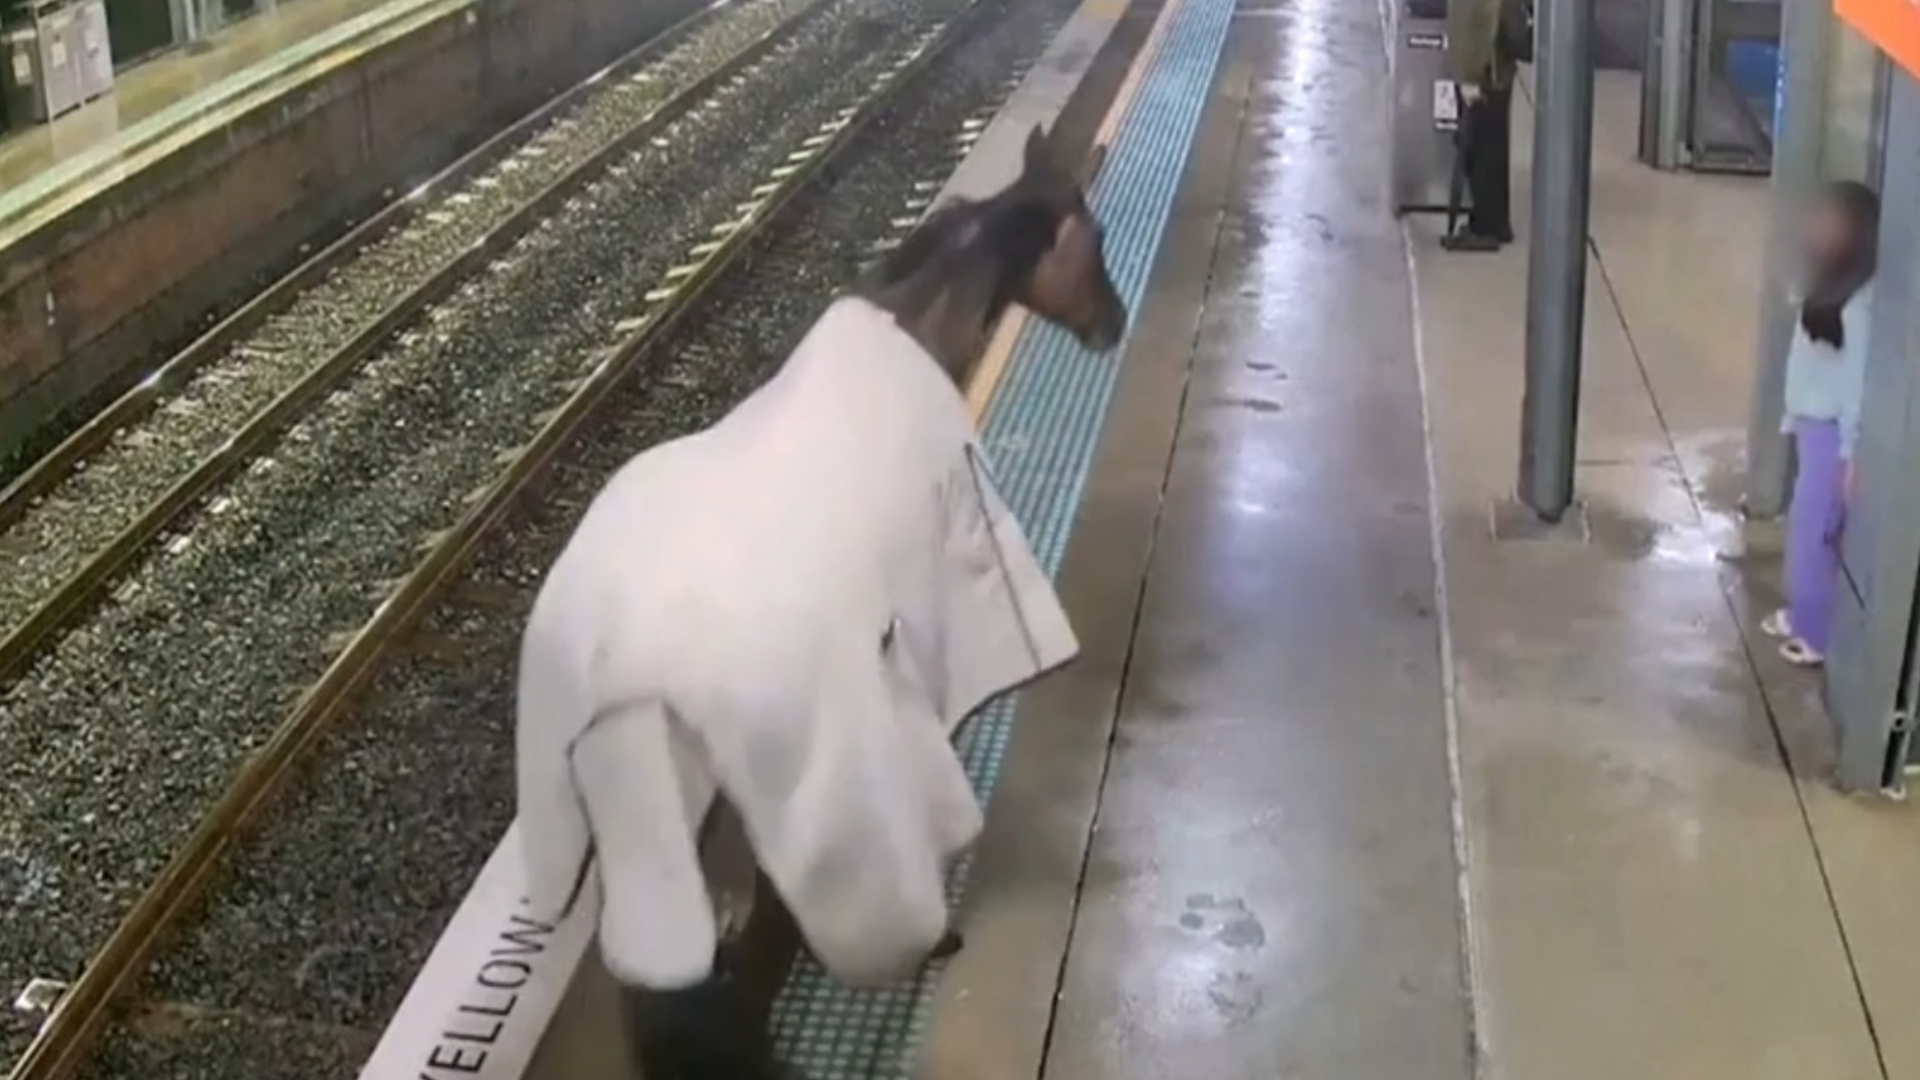 WATCH: Horse wanders onto train platform